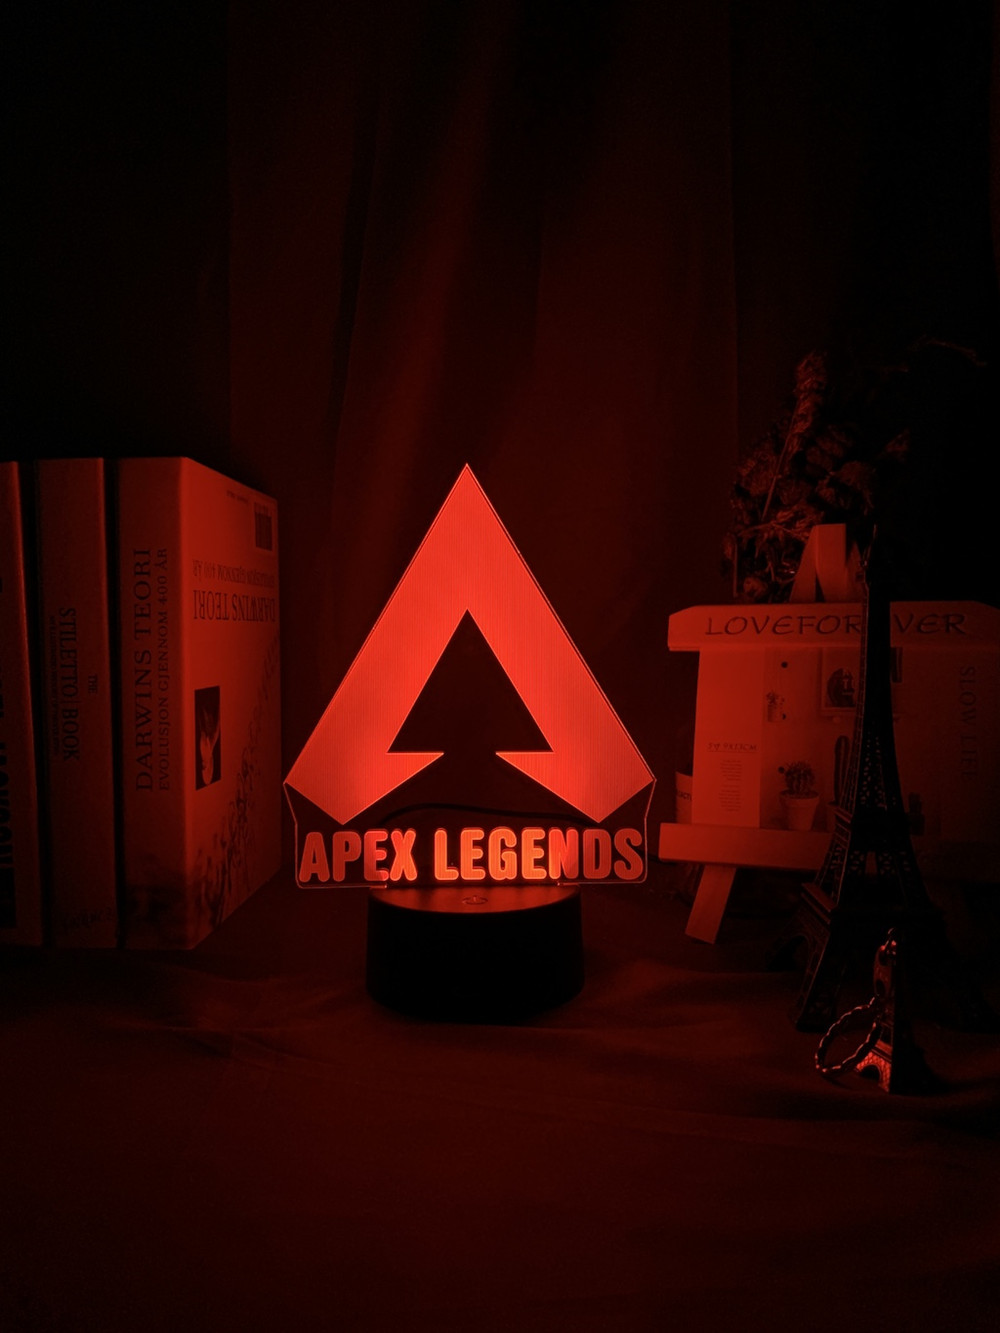 Apex-Legends-LOGO-Night-Light-Led-Color-Changing-Light-for-Game-Room-Decor-Ideas-Cool-Event-Prize-Ga-1817094-9